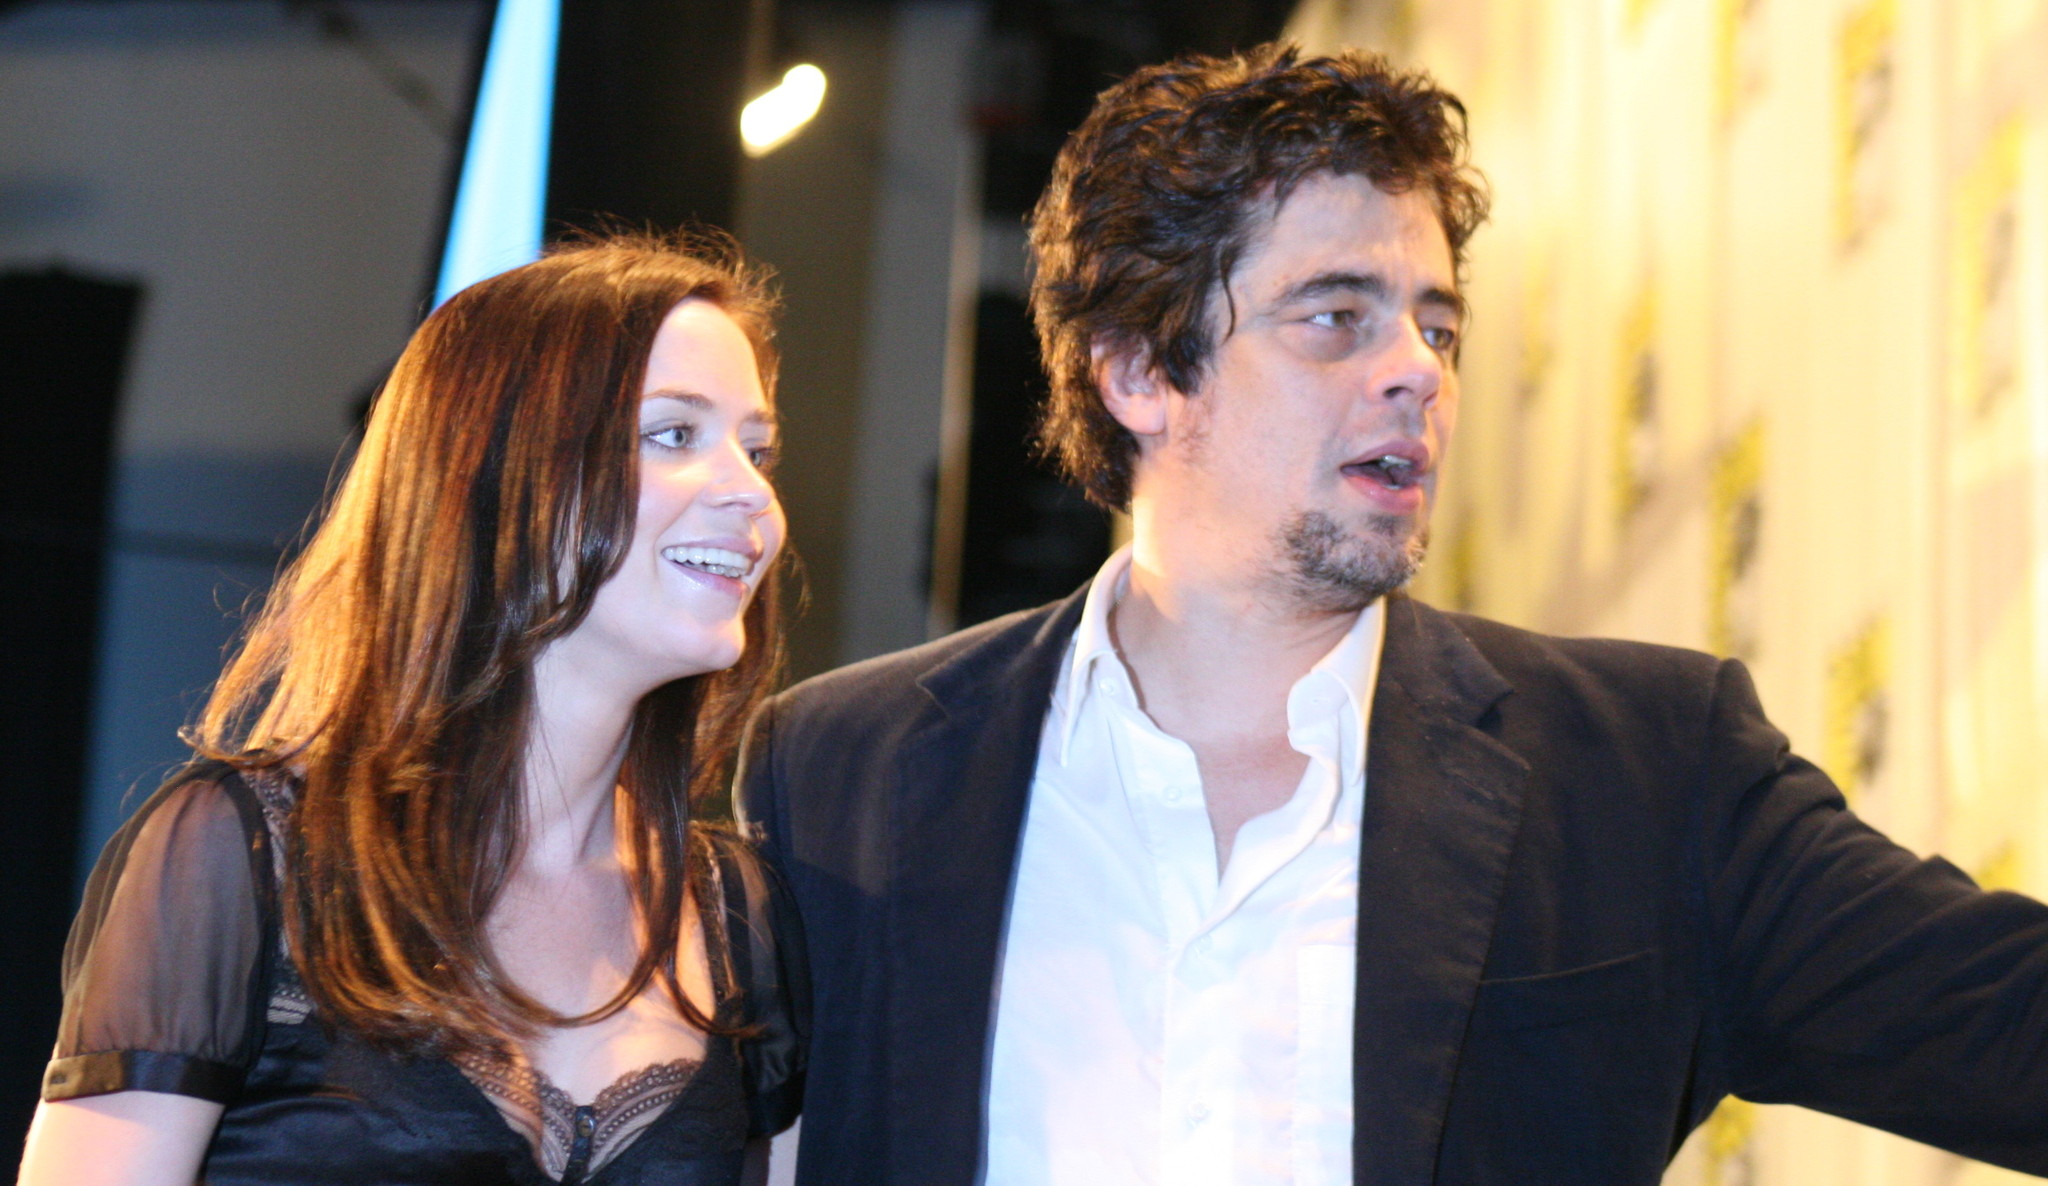 Benicio Del Toro and Emily Blunt at event of Vilkolakis (2010)